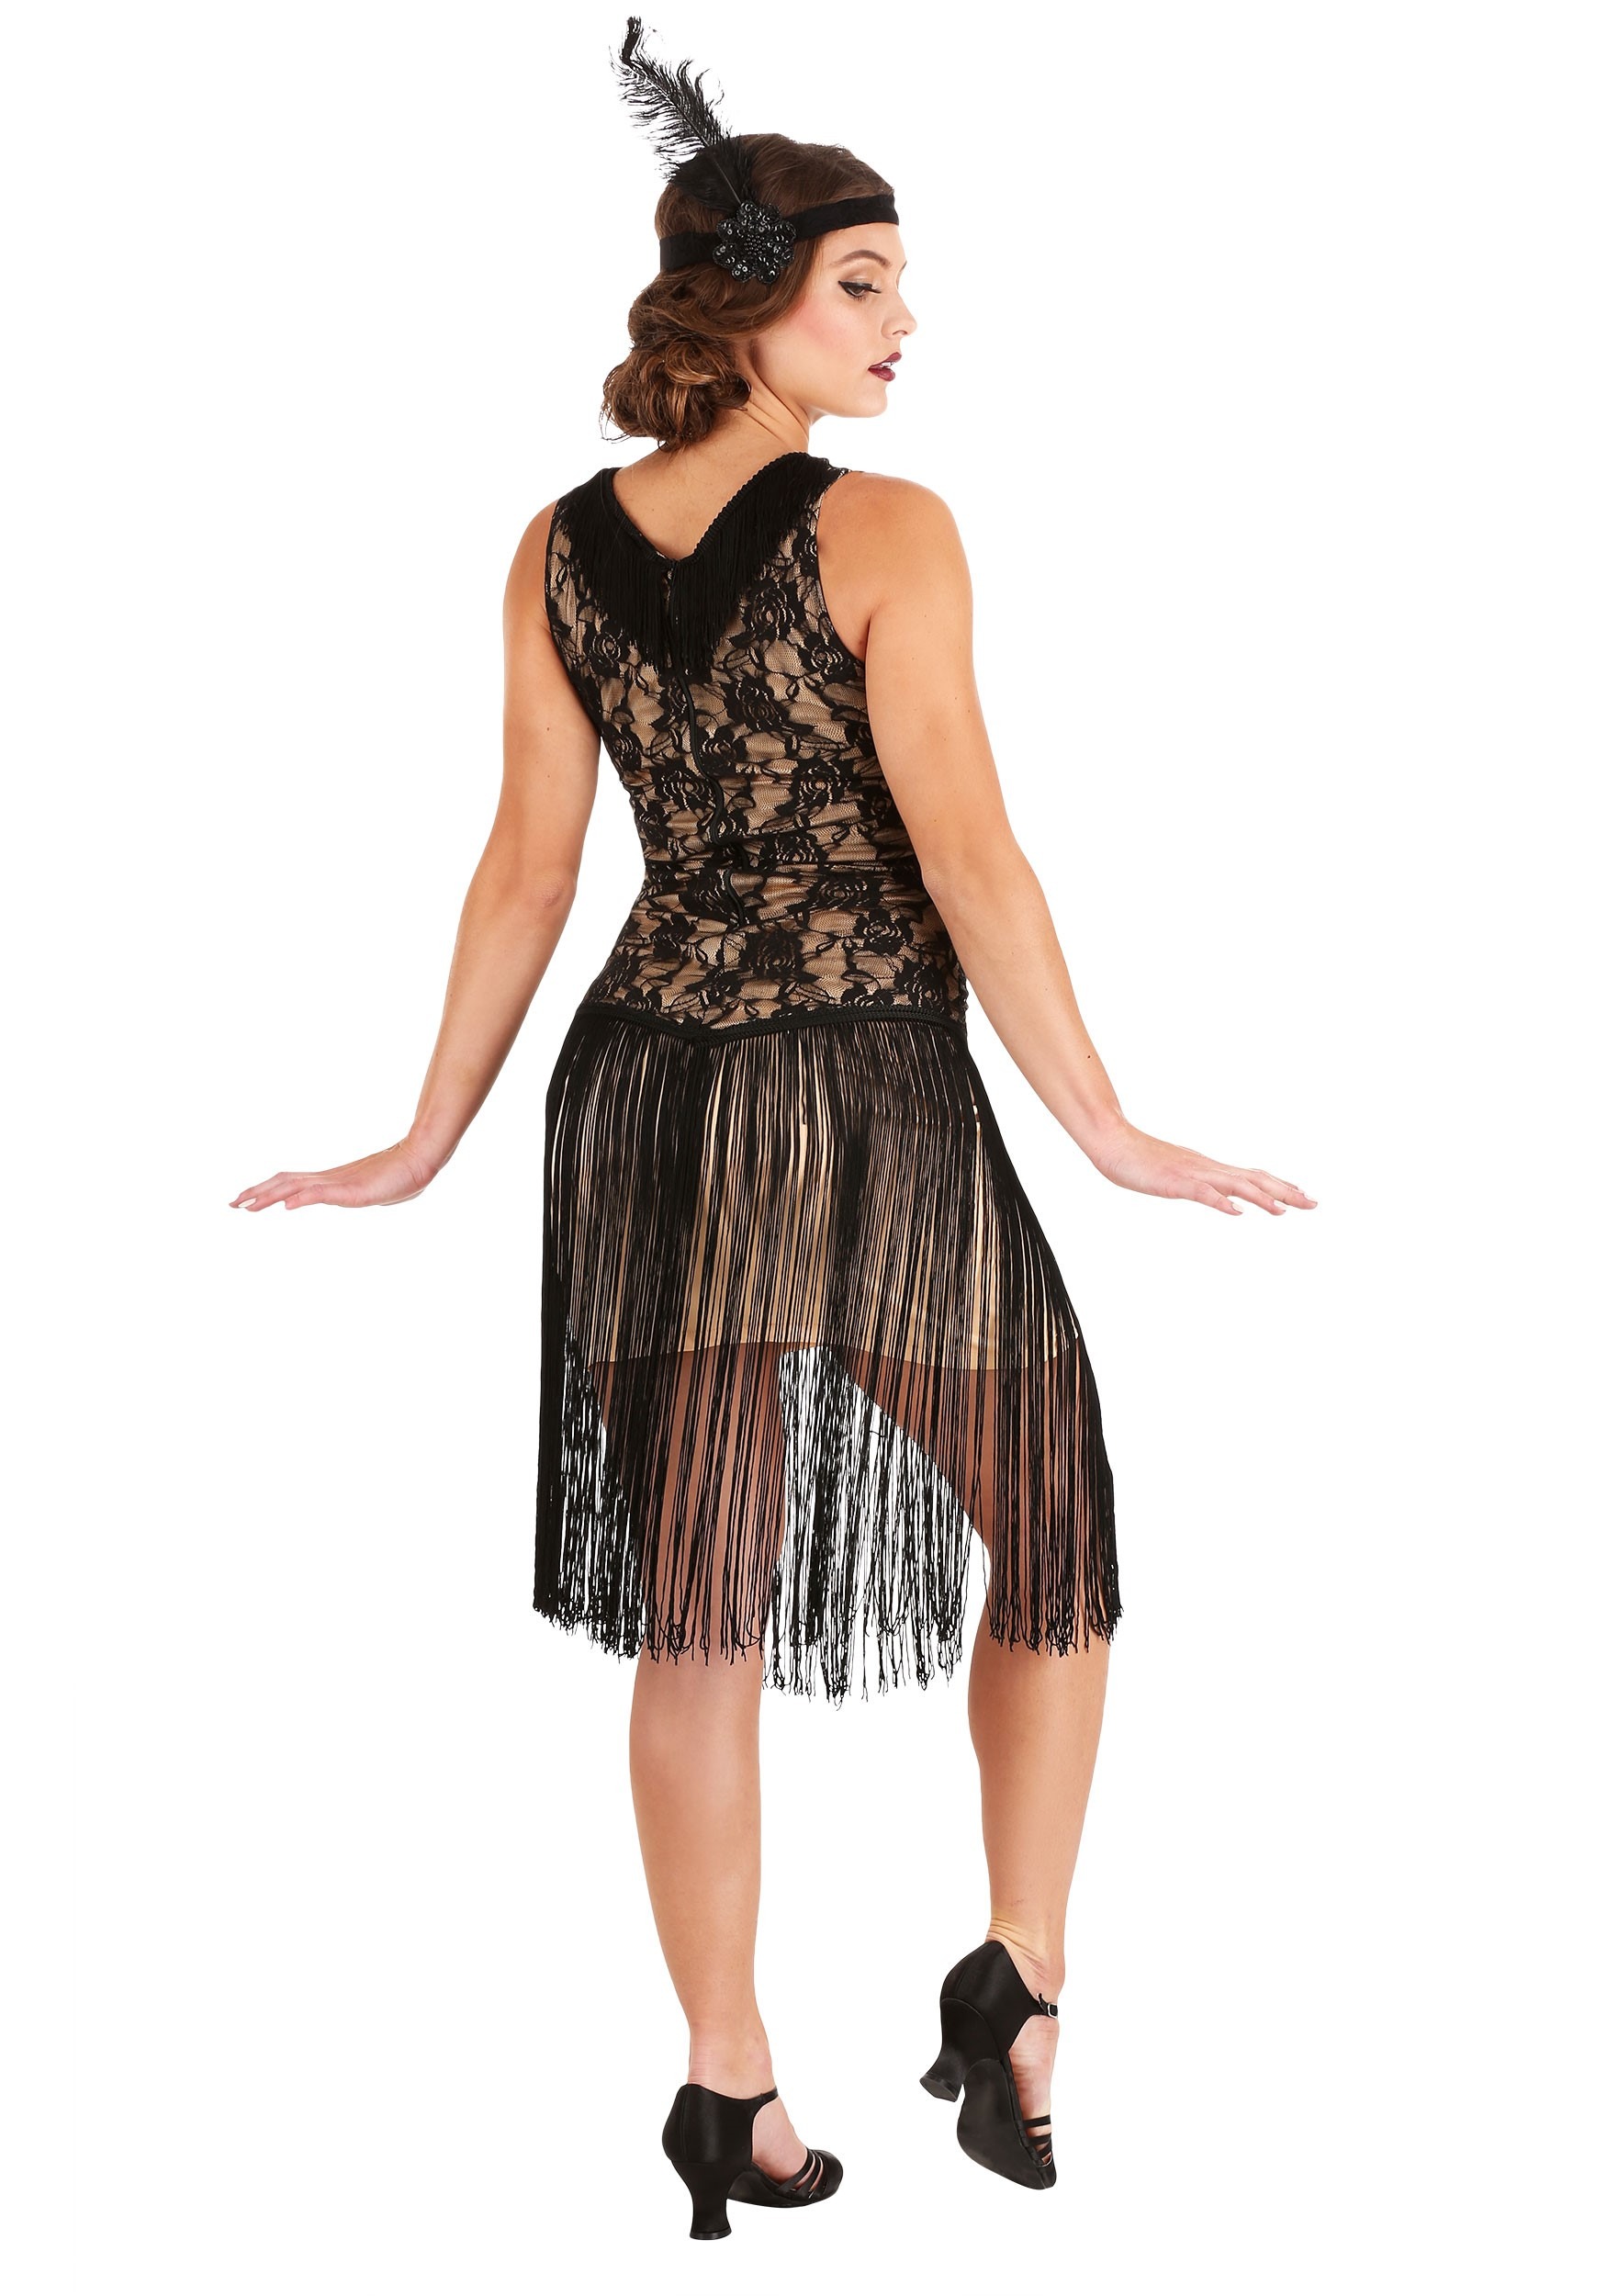 Plus Size Speakeasy Flapper Costume For Women 1X 2X